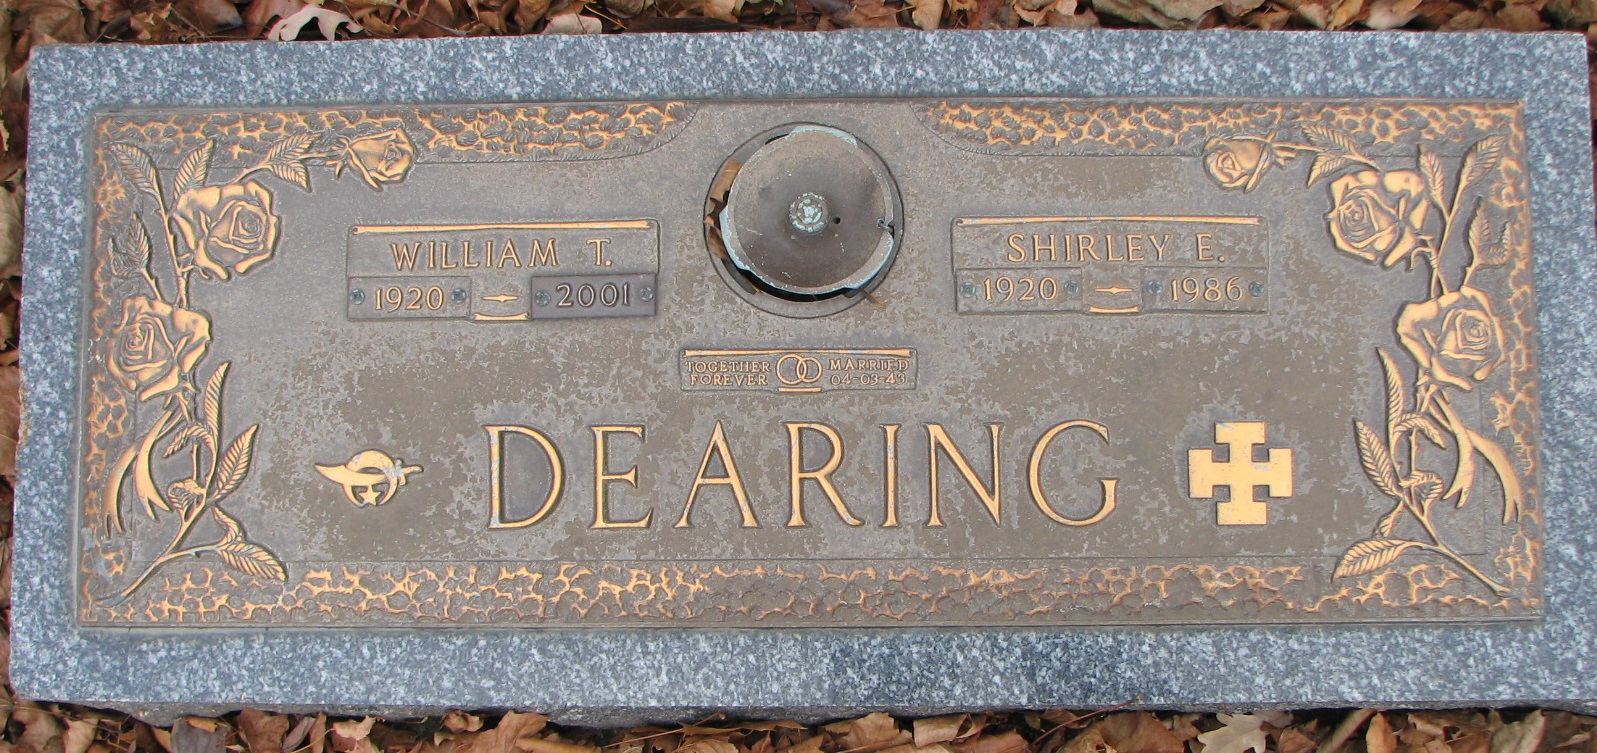 William 1920-2001 Shirley 1920-1980 Dearing